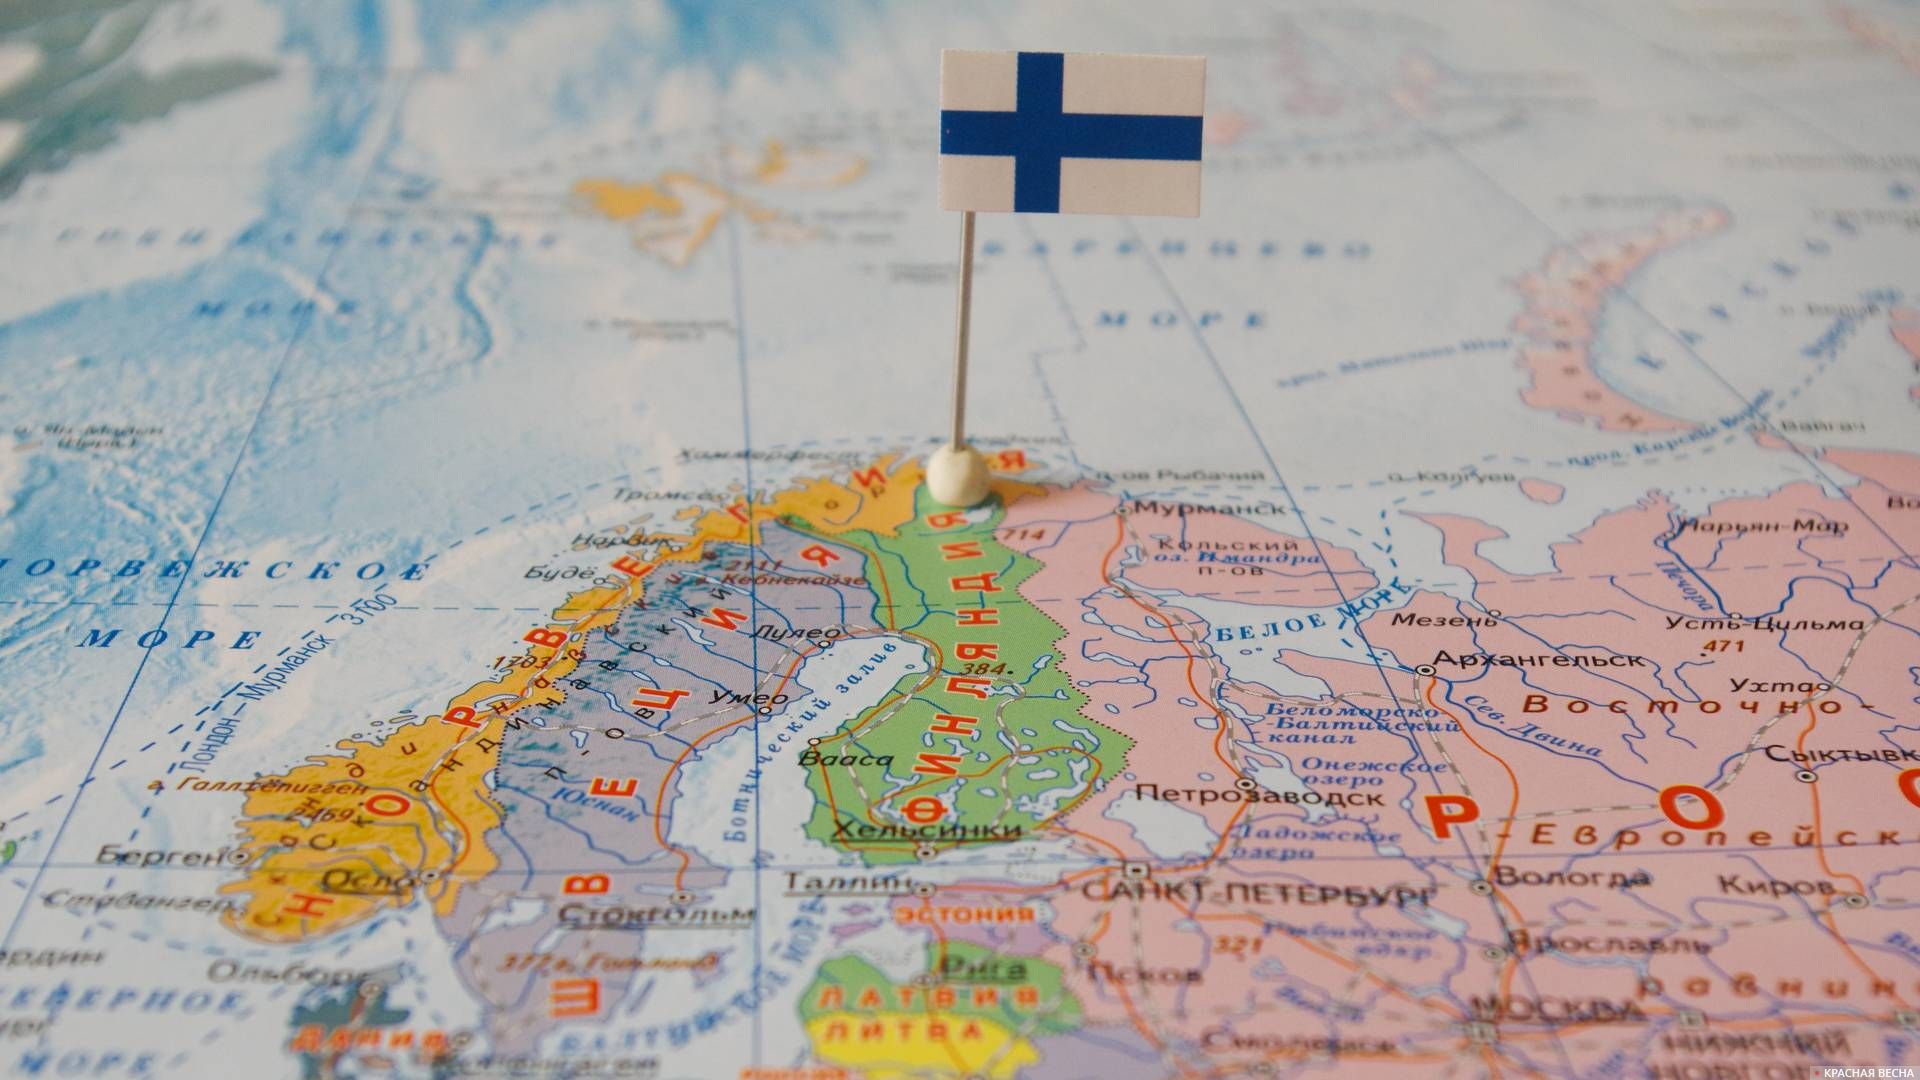 Финляндия граничит с россией. Граница России и Финляндии на карте.